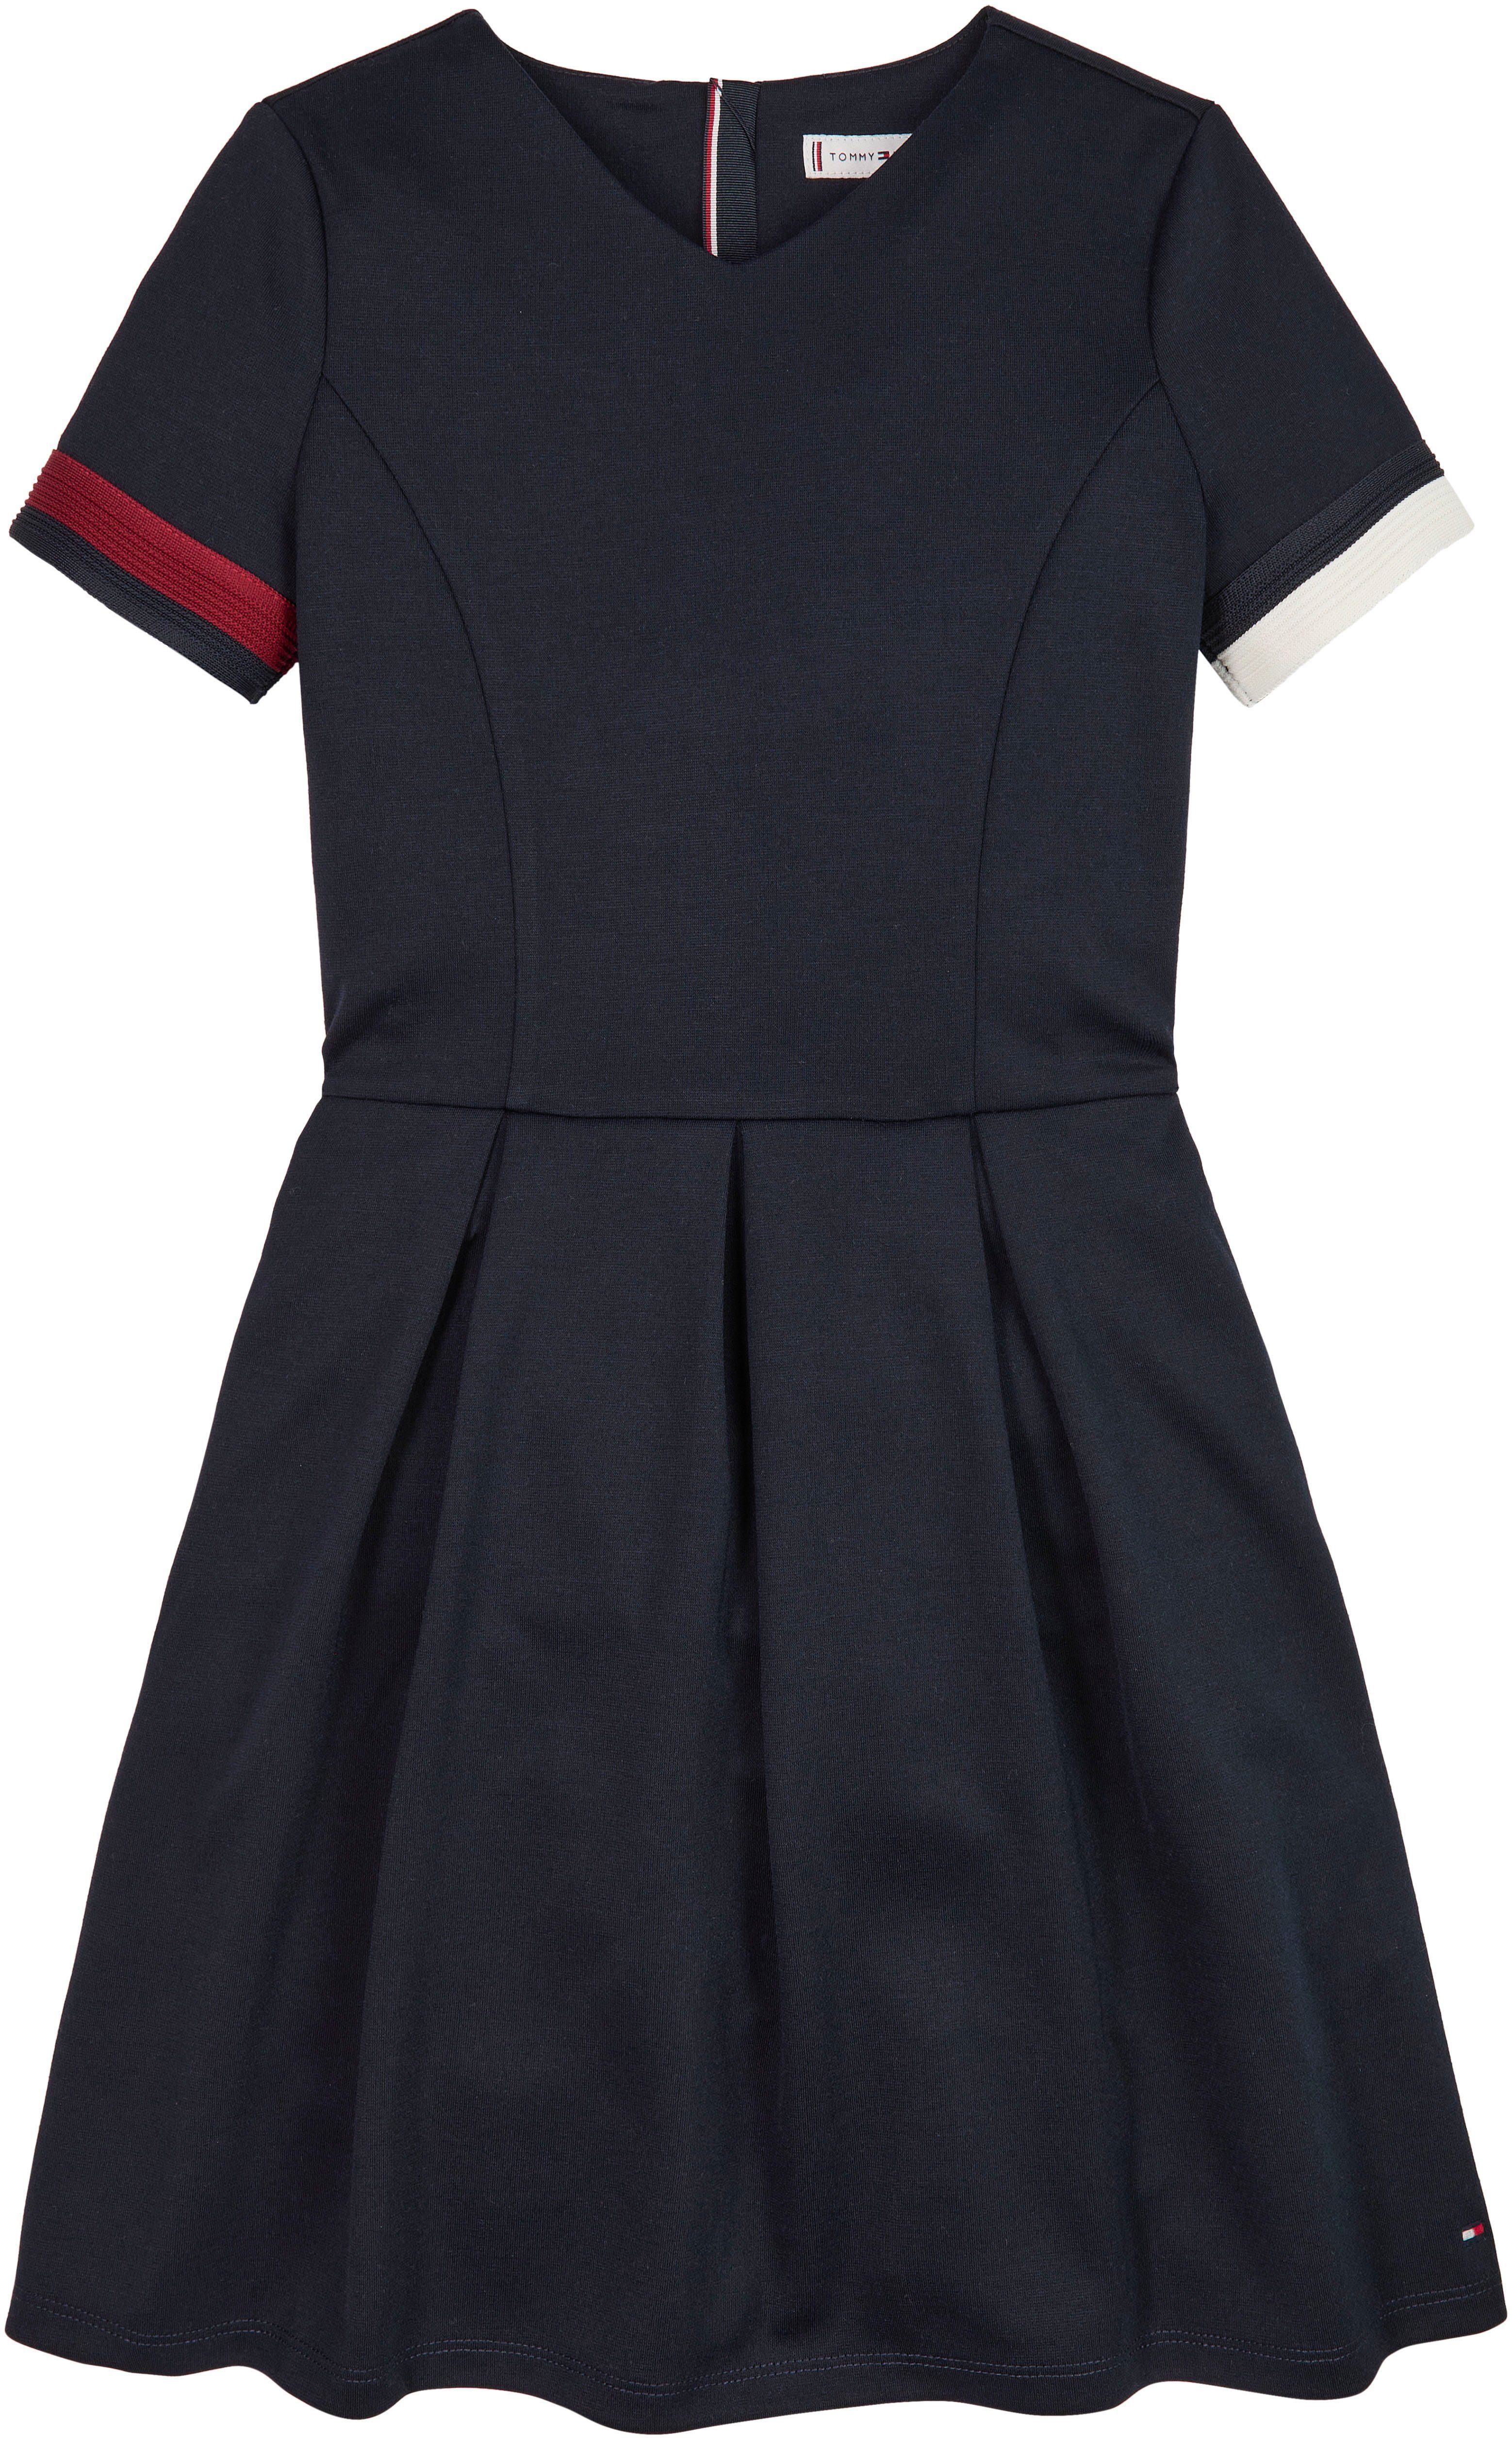 STRIPE GLOBAL PUNTO Junior Hilfiger Blusenkleid Kids Mädchen Tommy MiniMe,für Kinder dunkelblau DRESS